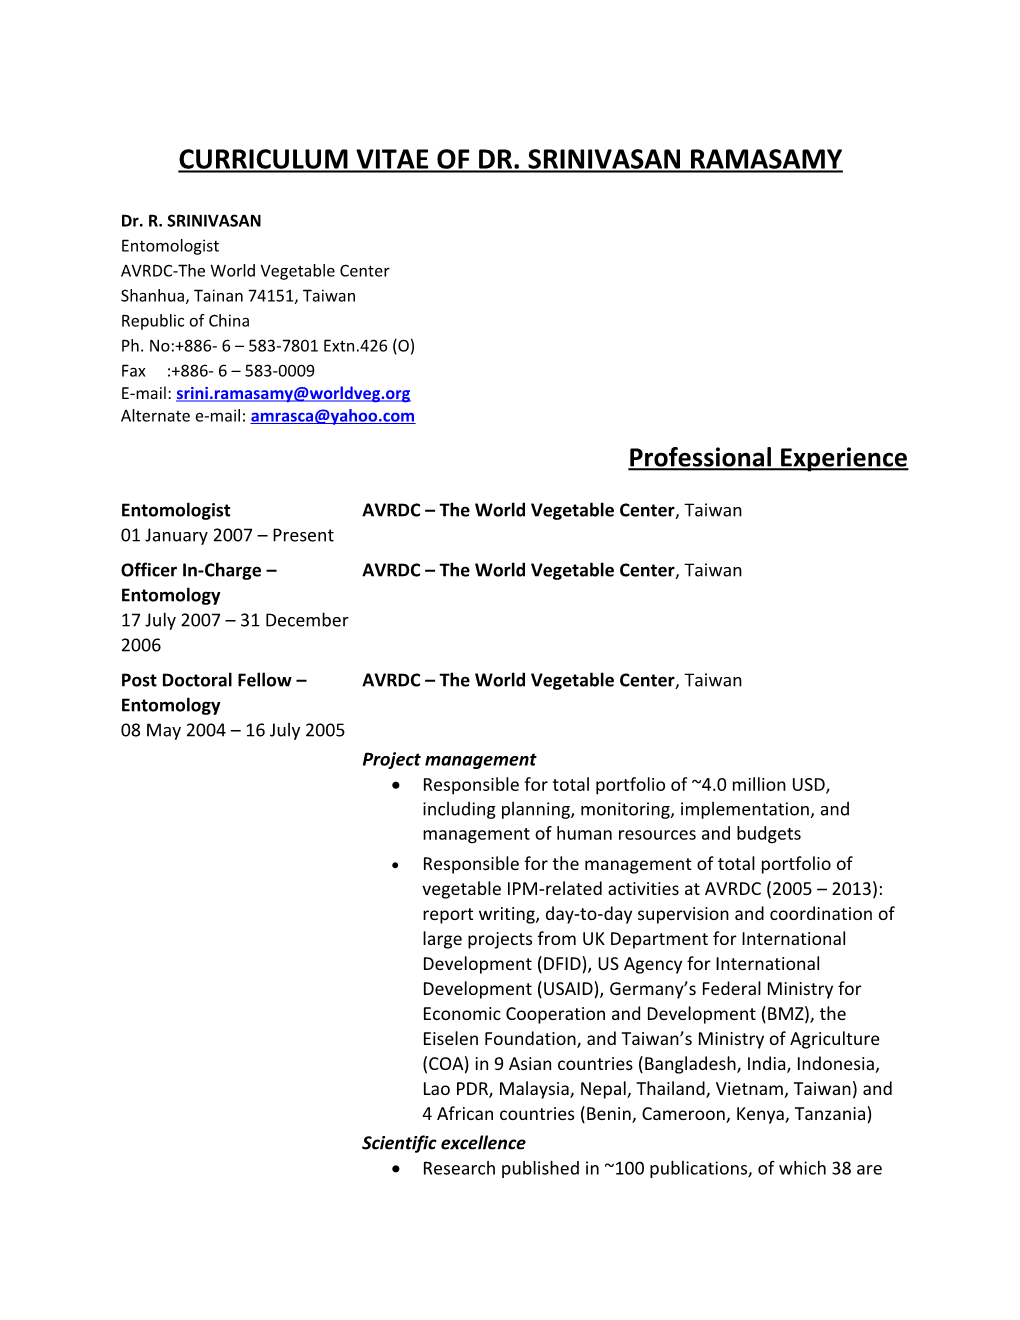 Curriculum Vitae of Dr.Srinivasan Ramasamy